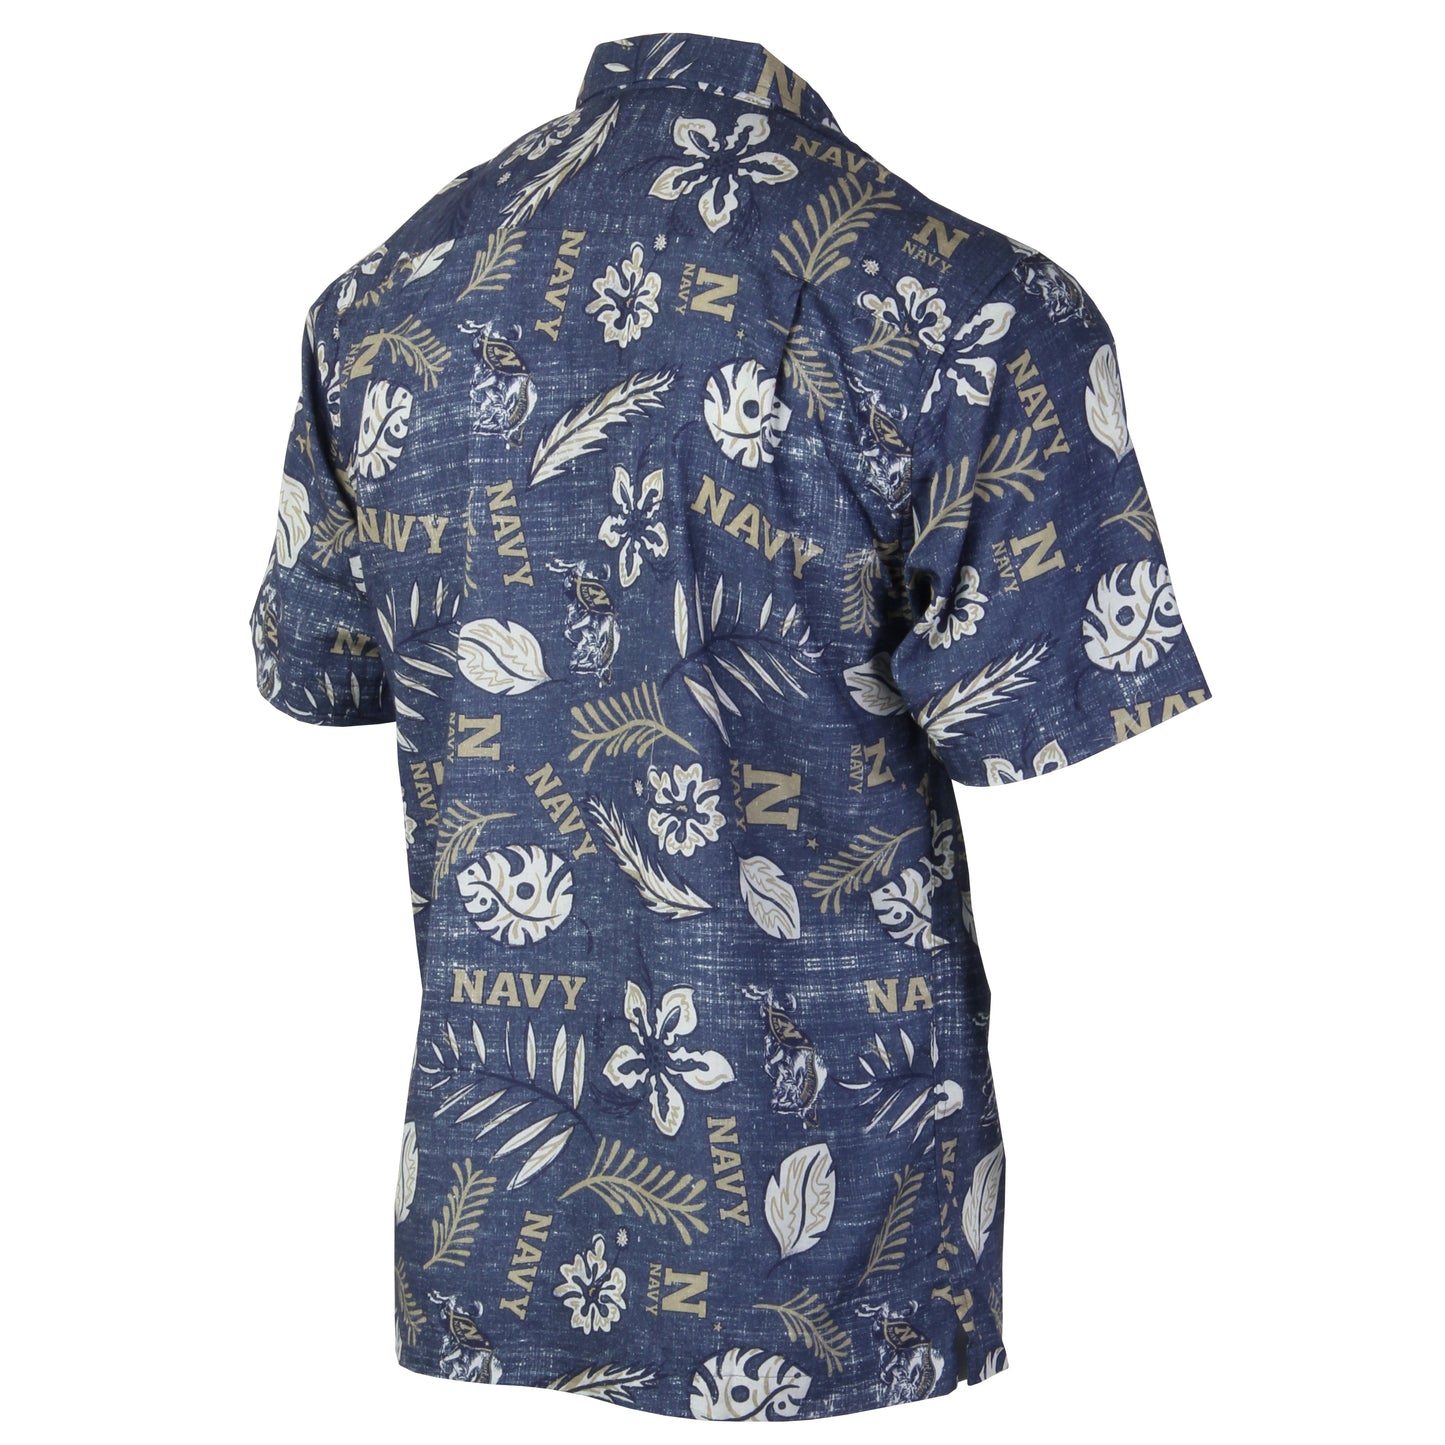 Naval Academy Midshipmen Men's Vintage Floral Shirt